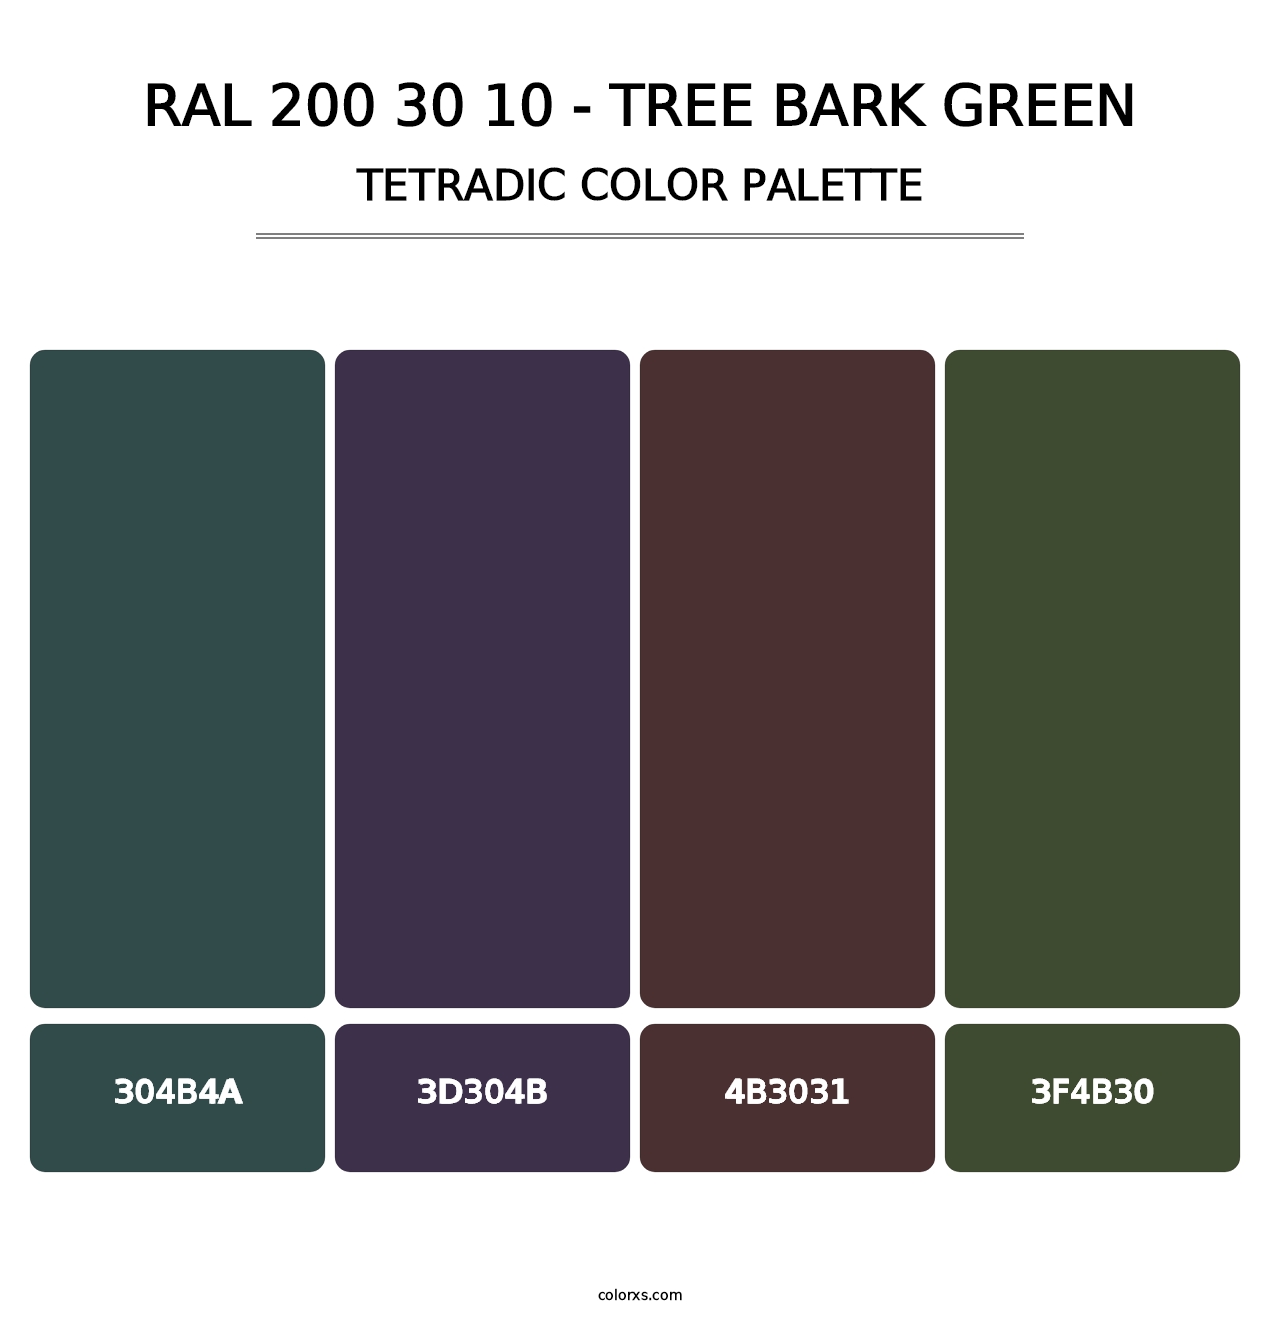 RAL 200 30 10 - Tree Bark Green - Tetradic Color Palette